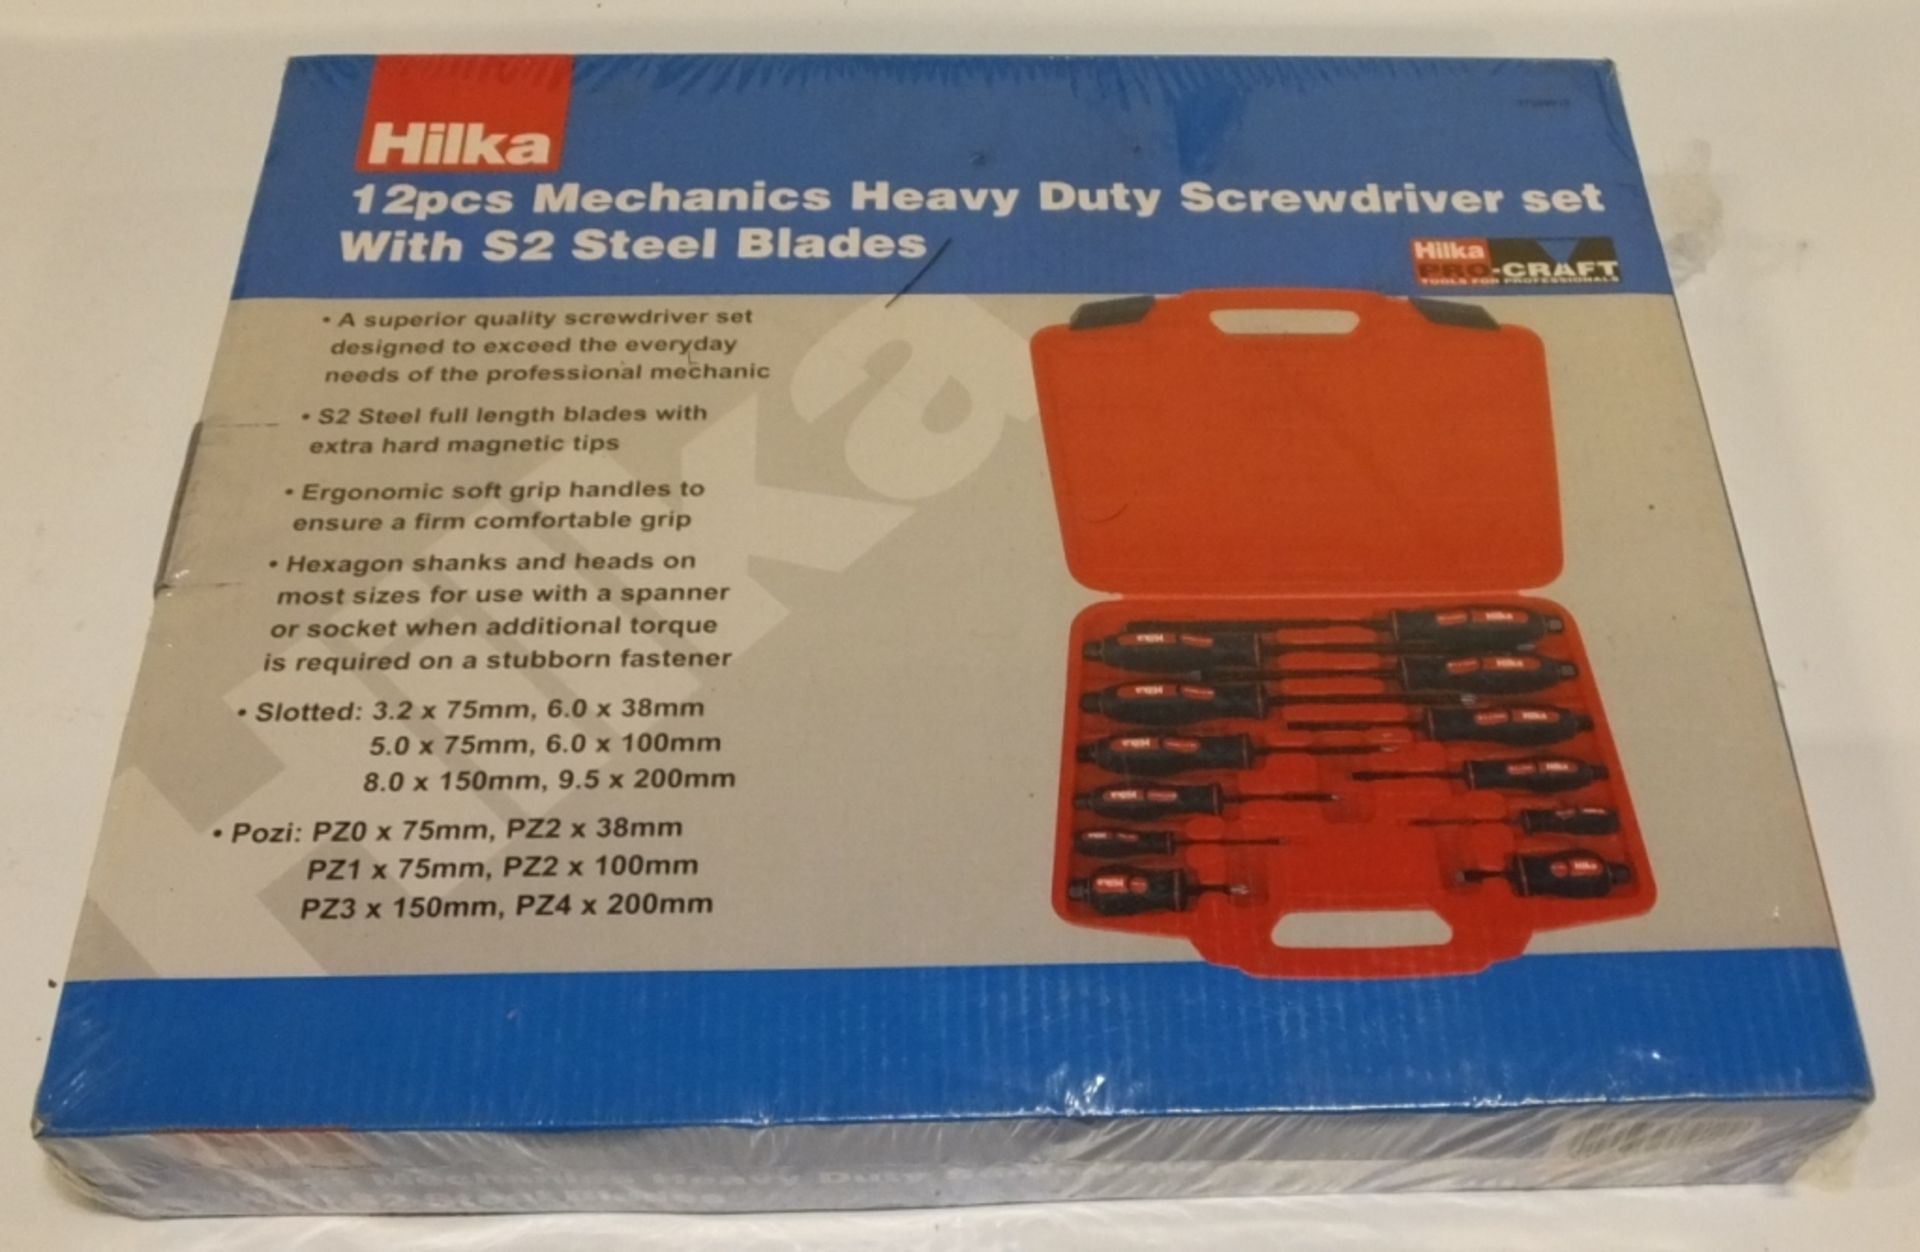 Hilka 12 piece Mechanics Heavy Duty Screwdriver set with S2 Steel blades